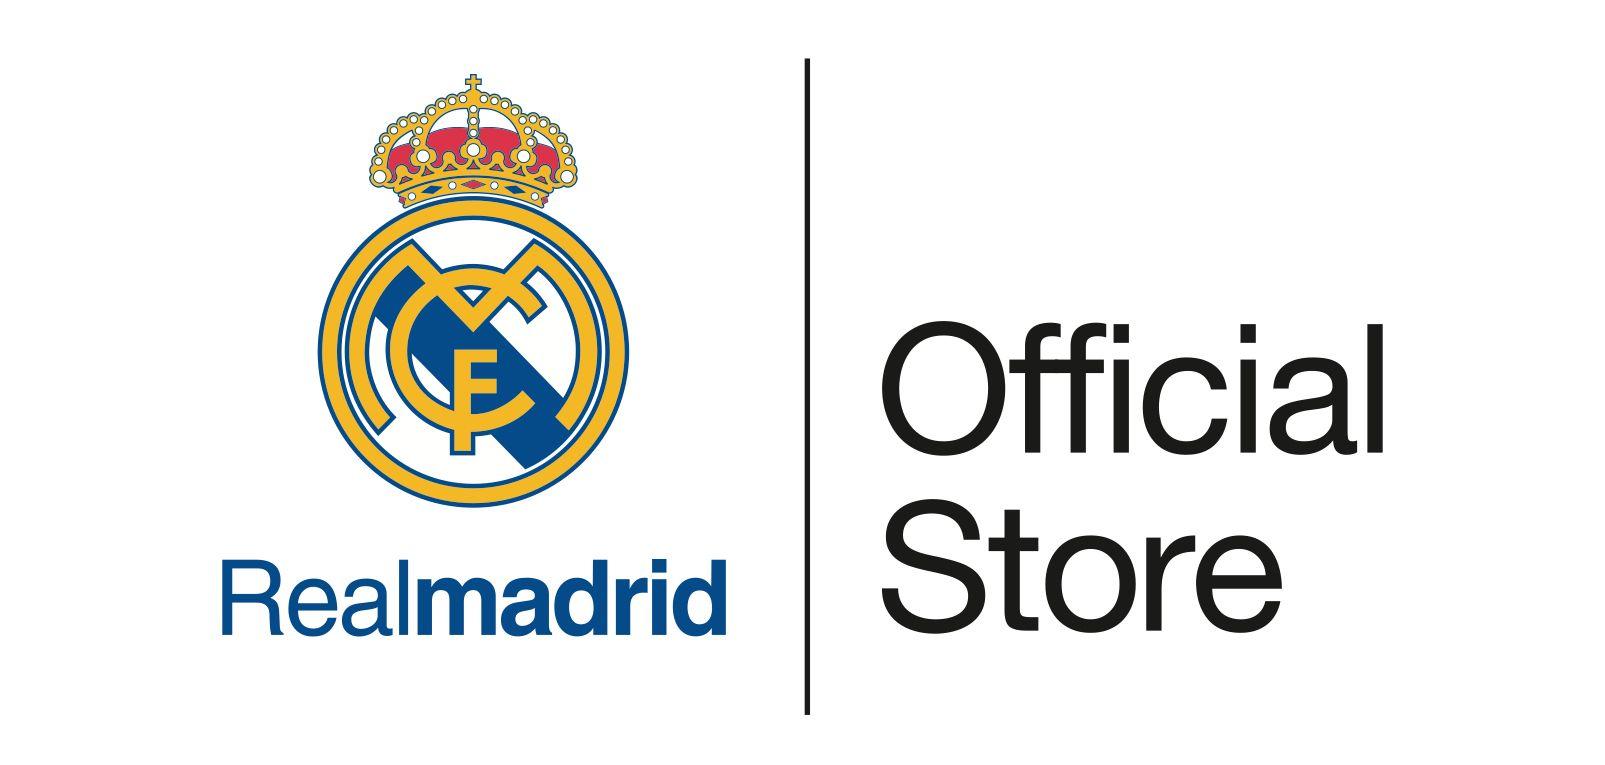 Adidas Real Madrid Logo - Real Madrid Official Store, Gran Vía 31. sanzpont [arquitectura]